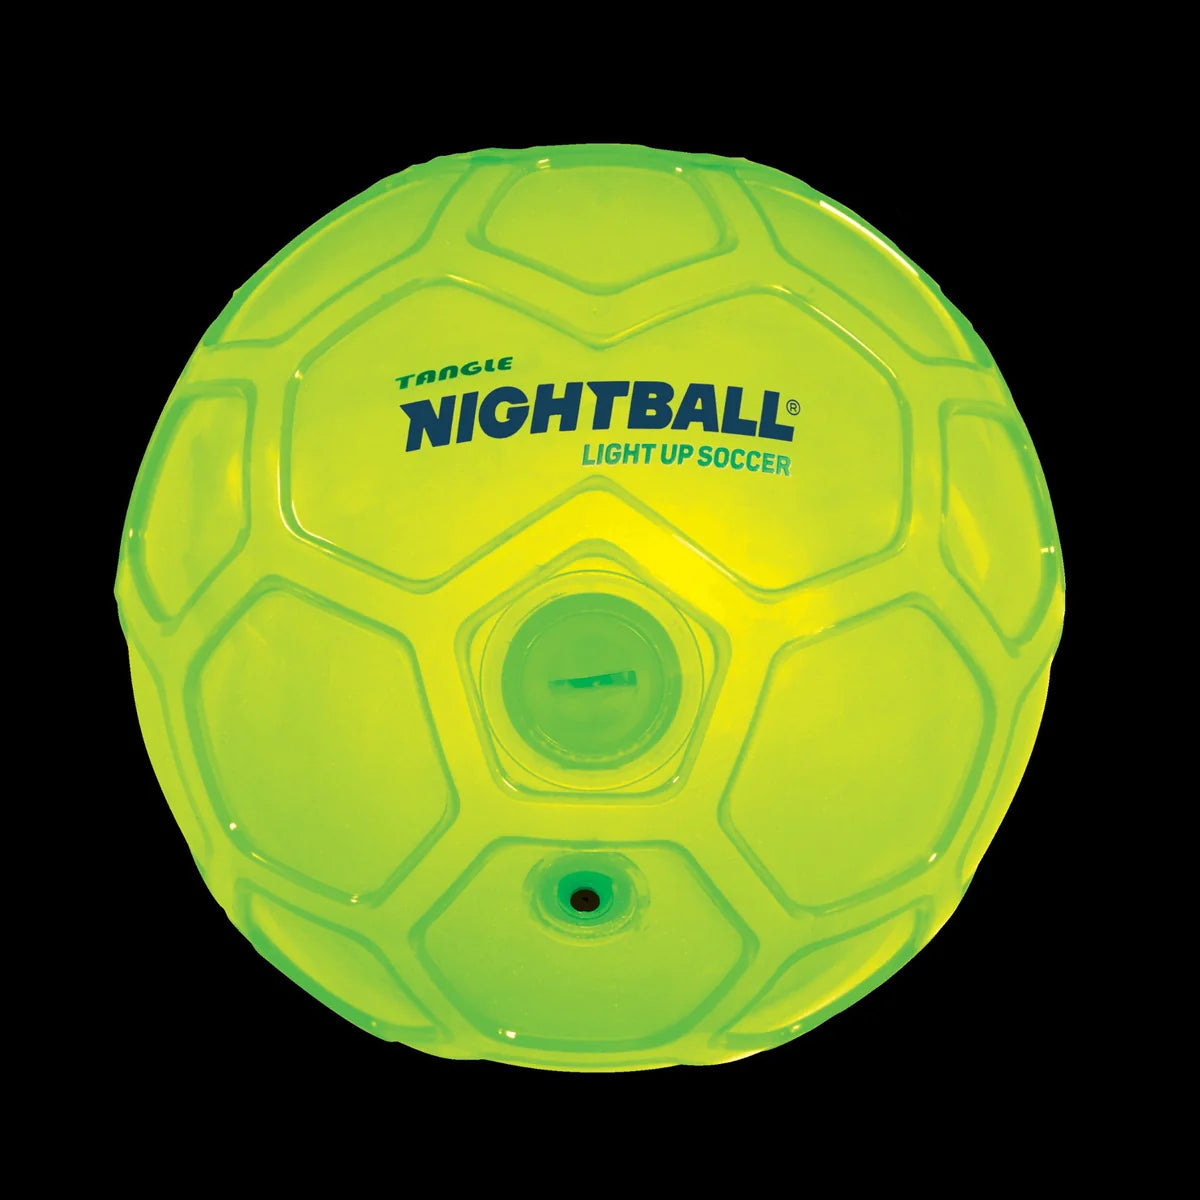 Tangle NightBall Soccer